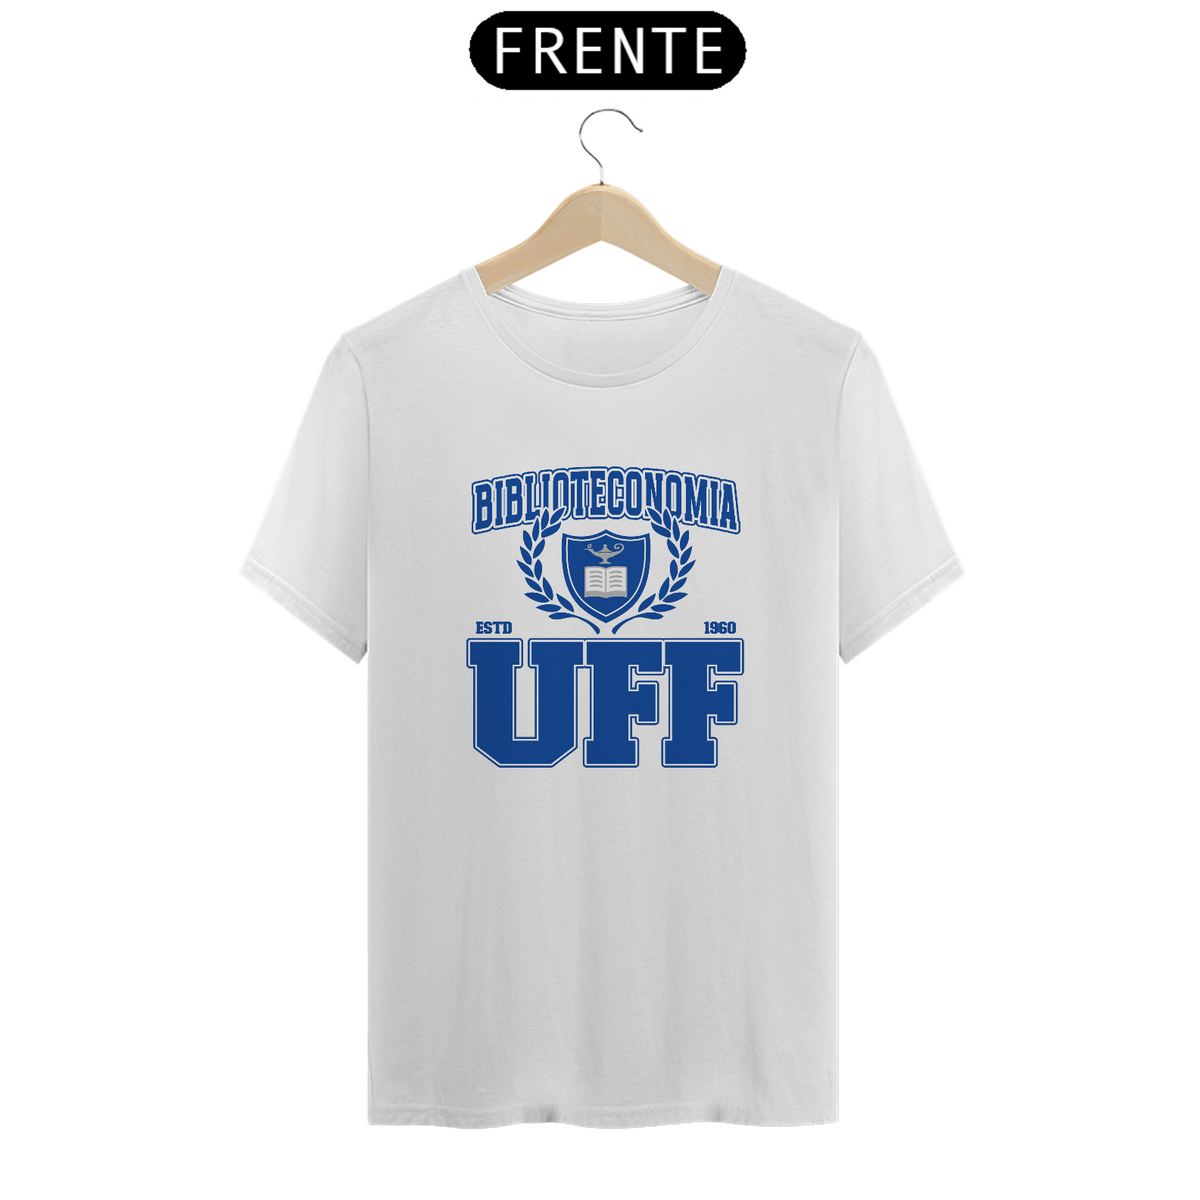 Nome do produto: UniVerso - Camisa Biblioteconomia UFF 